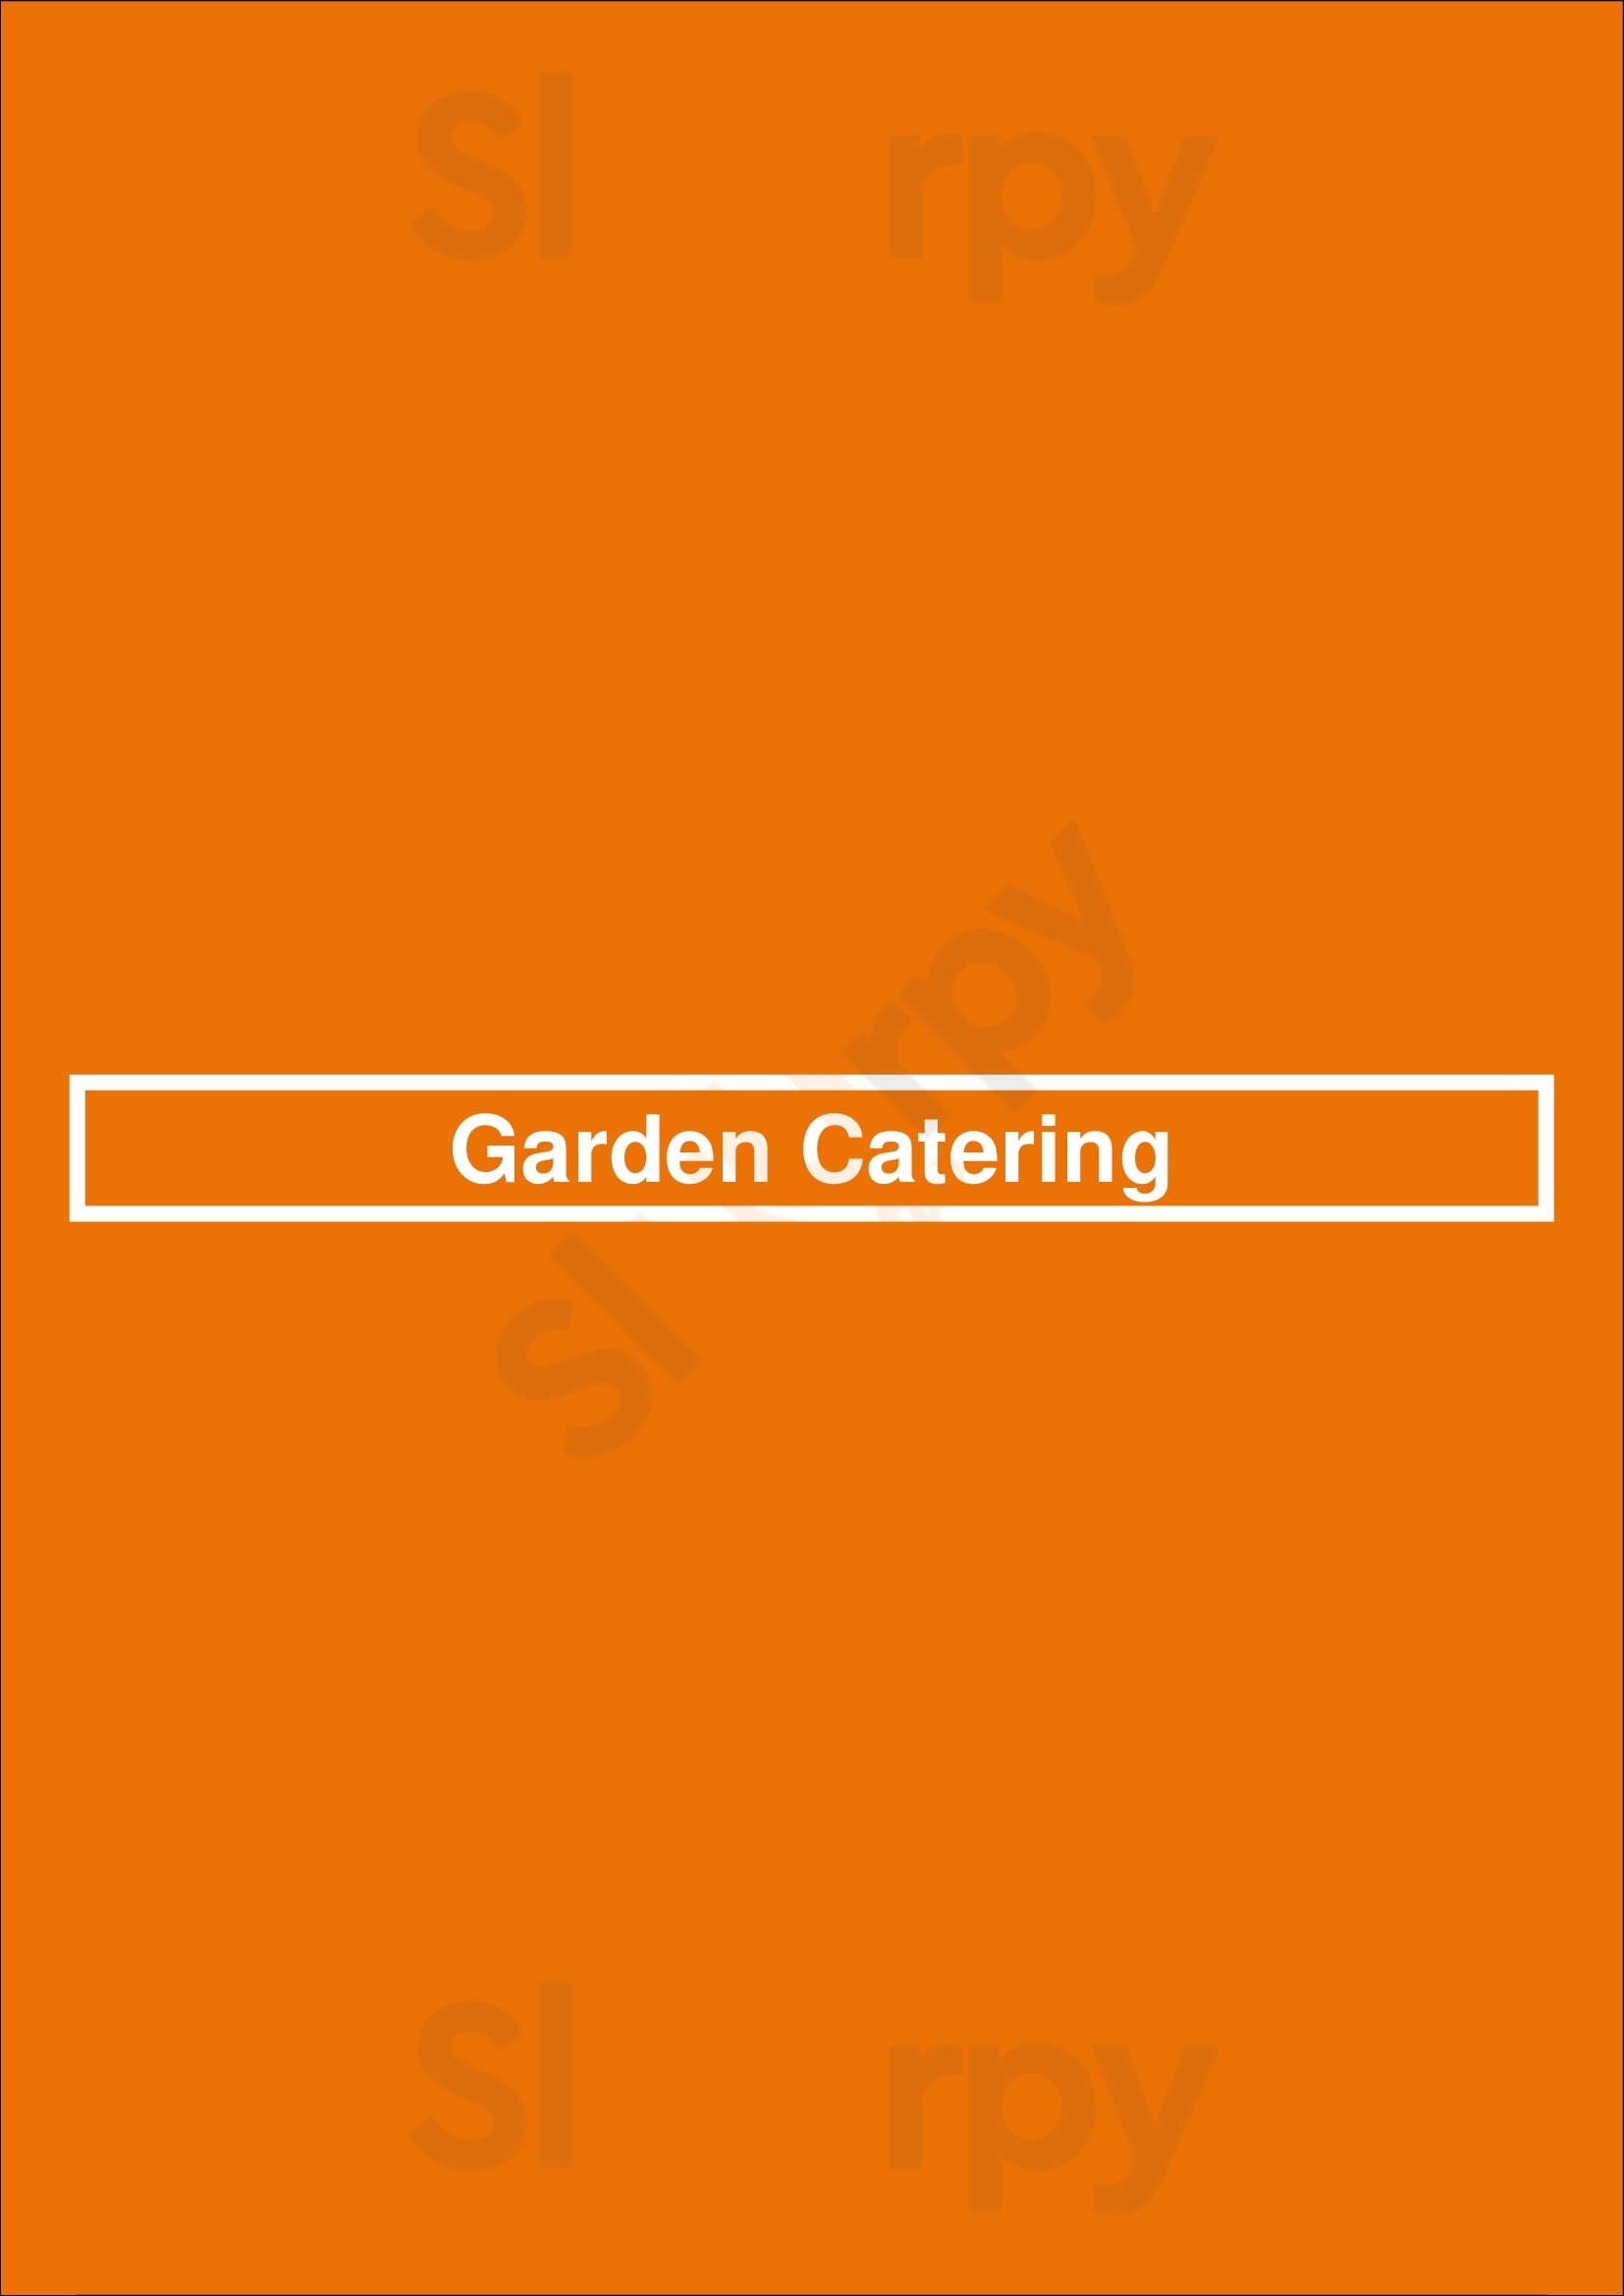 Garden Catering - Port Chester Port Chester Menu - 1